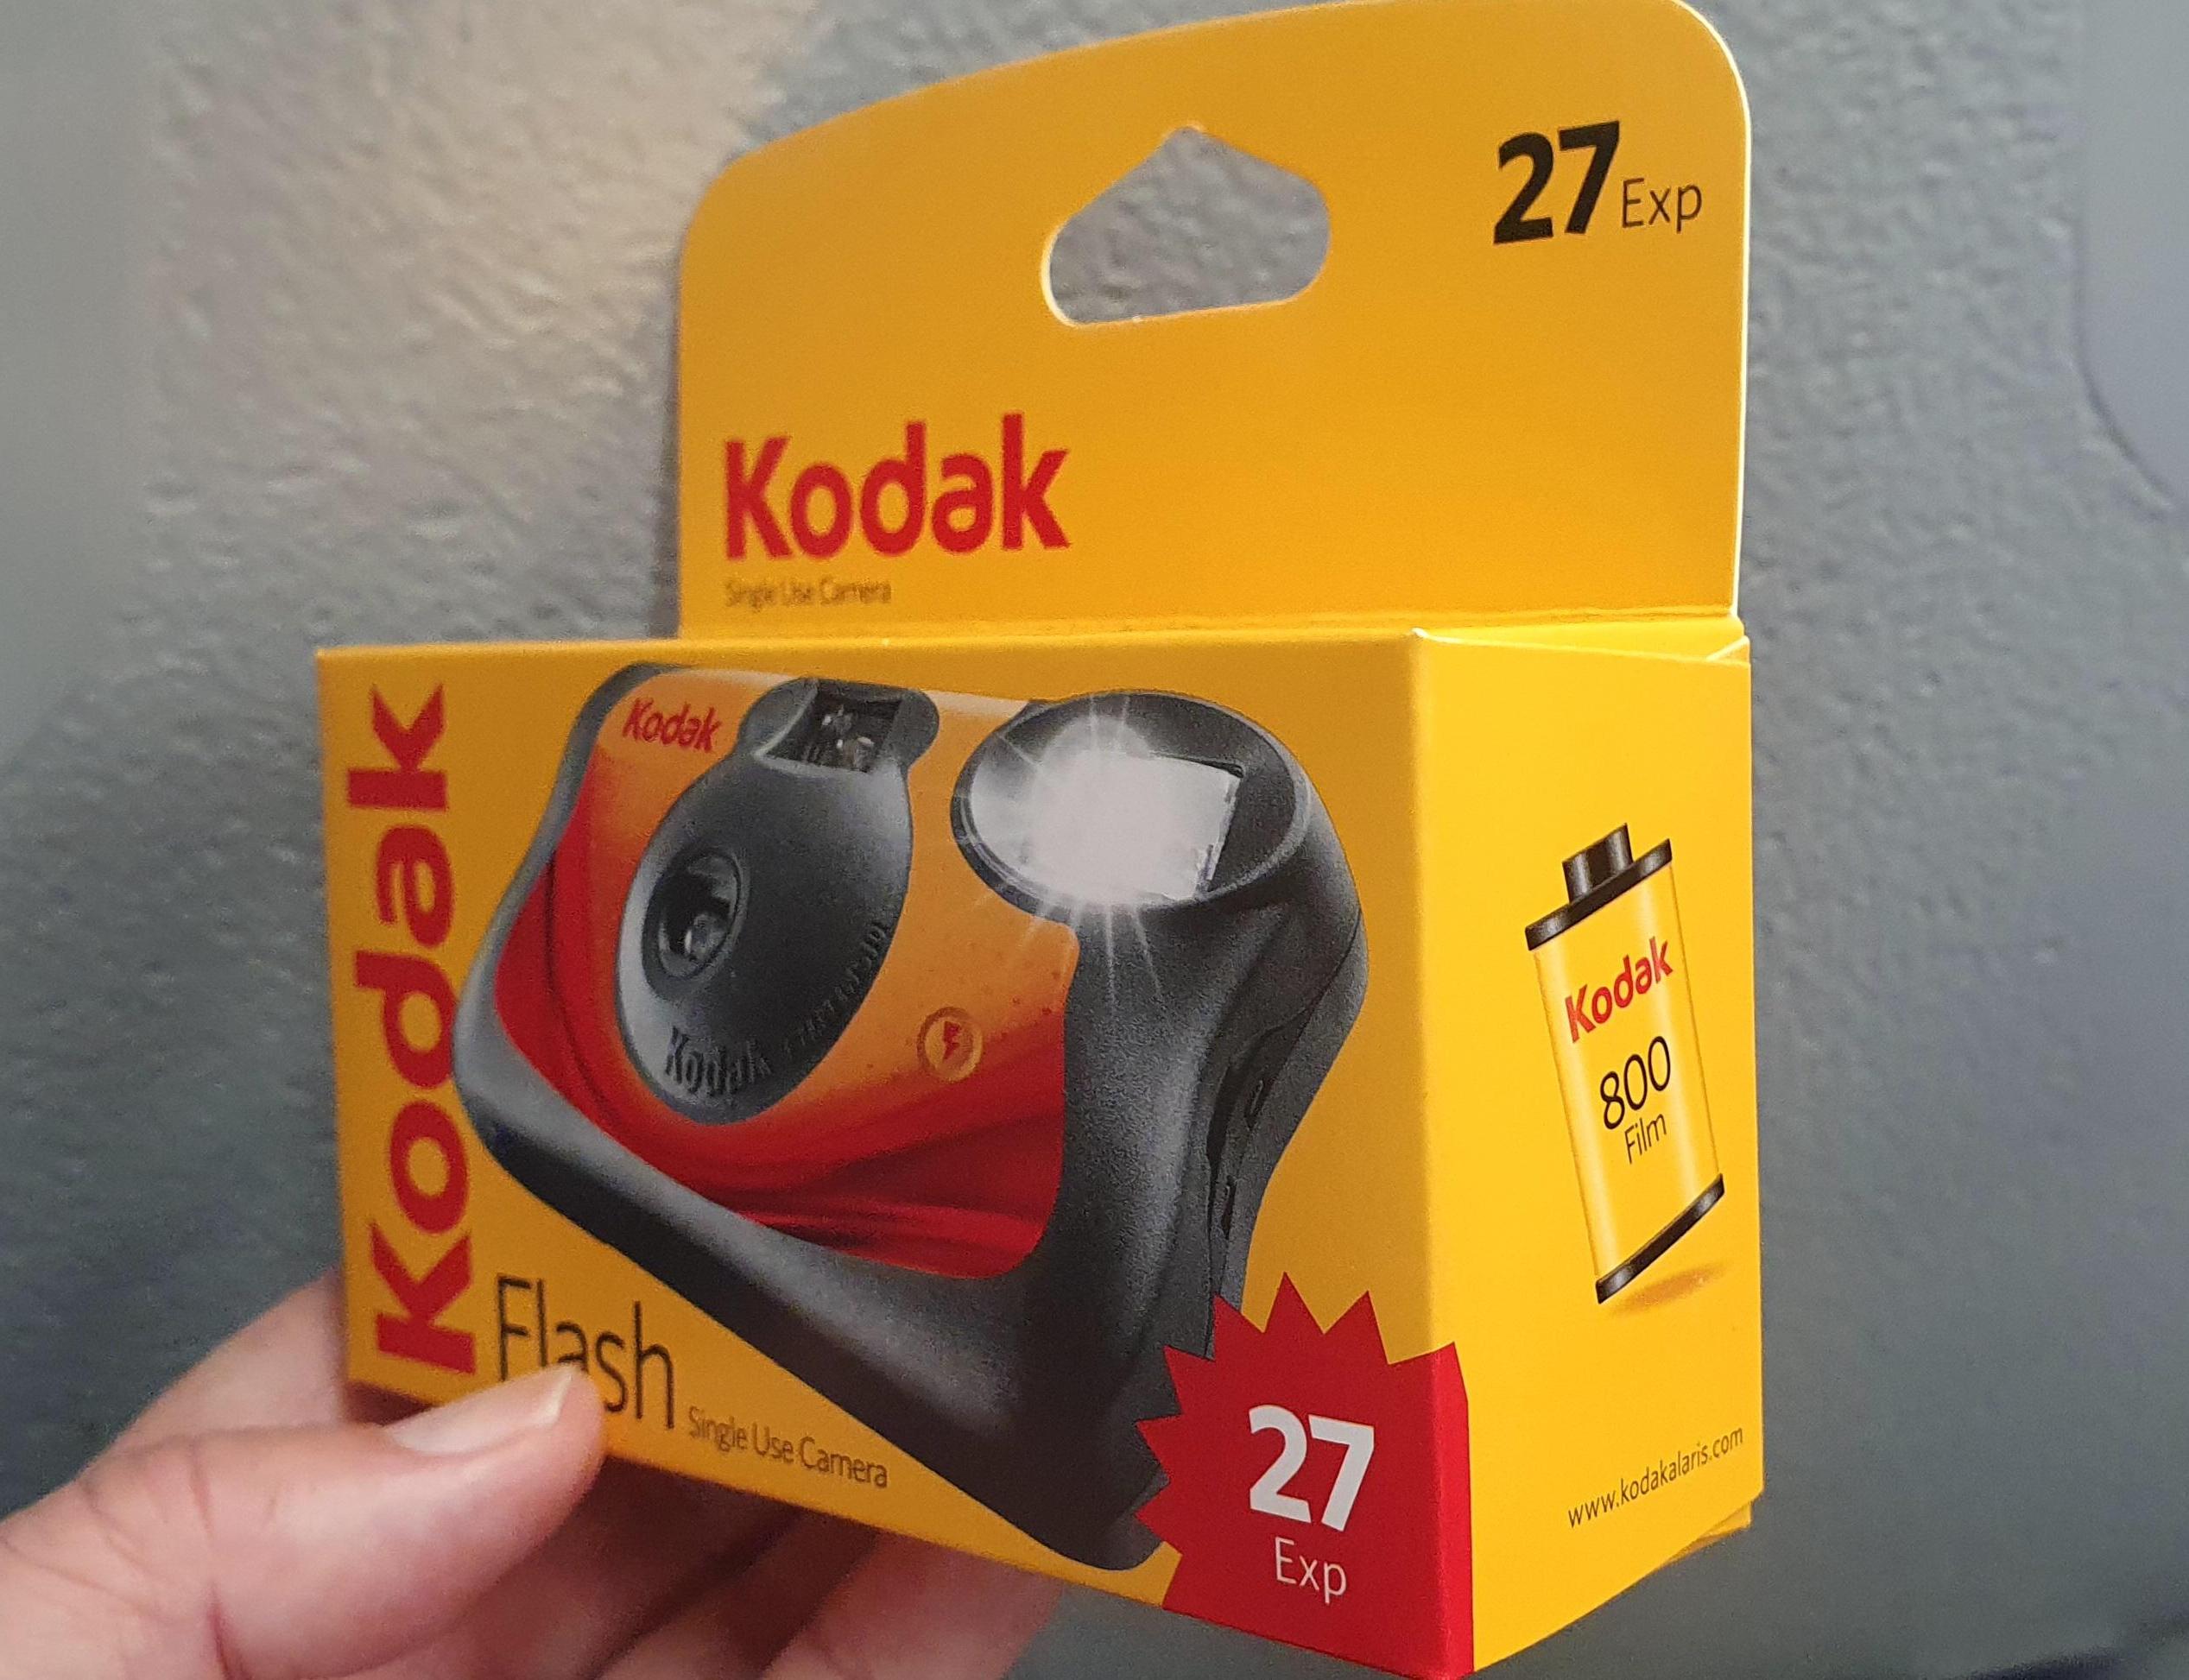 Reloading Kodak's Disposable Camera With Film